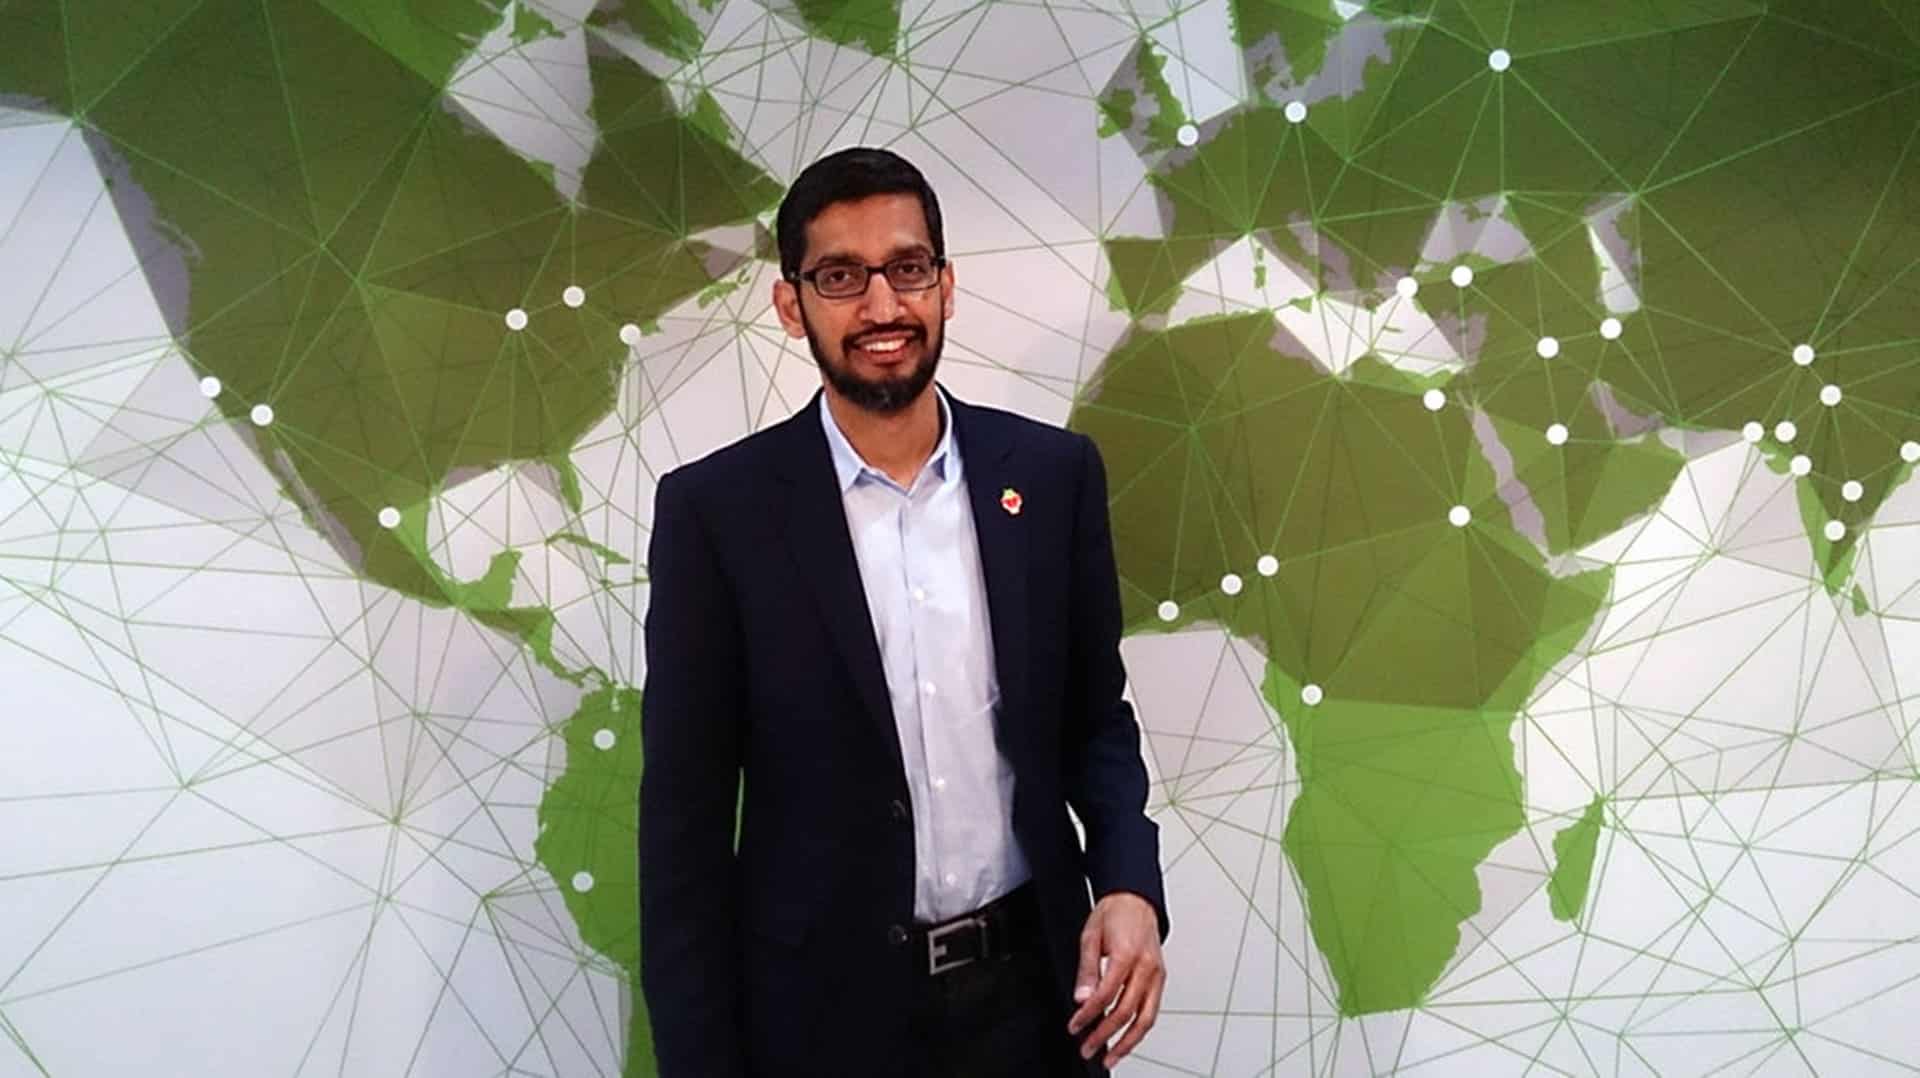 150 million people across 40 countries using Google Pay: Sundar Pichai